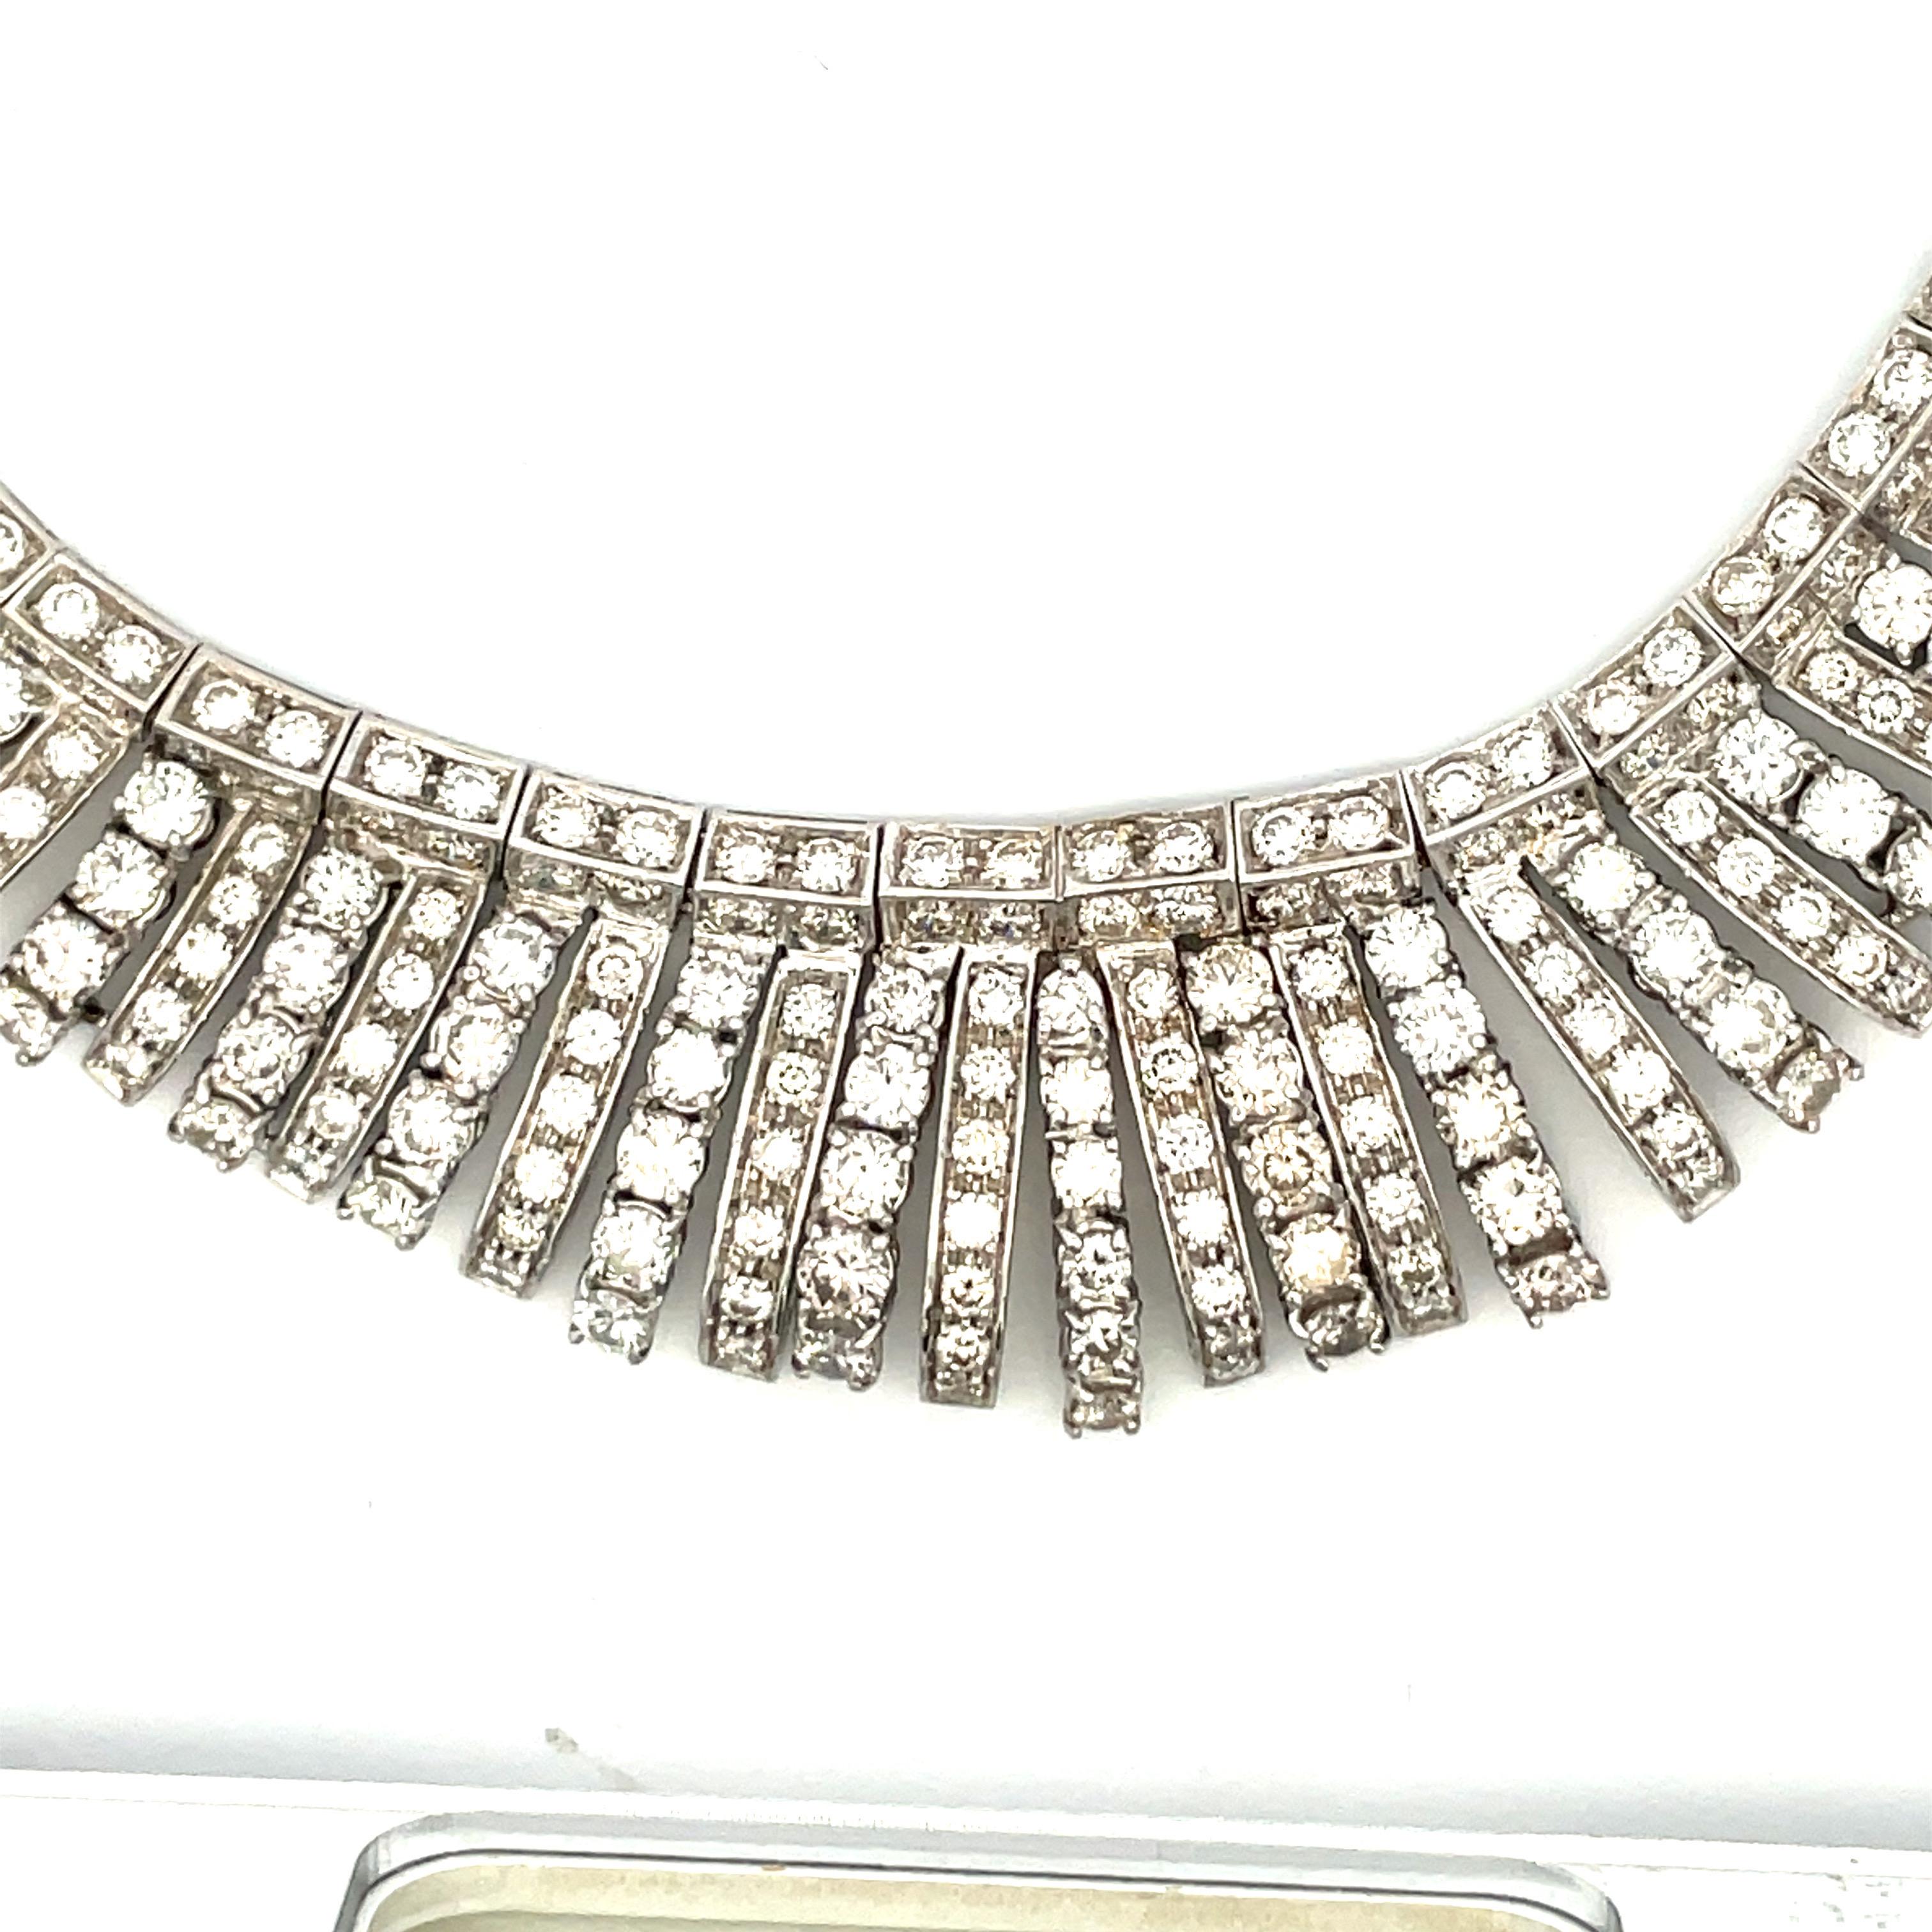 Contemporary Vintage Diamond Collar Bib Necklace 66 Carats 18 Karat White Gold 113.5 Grams For Sale